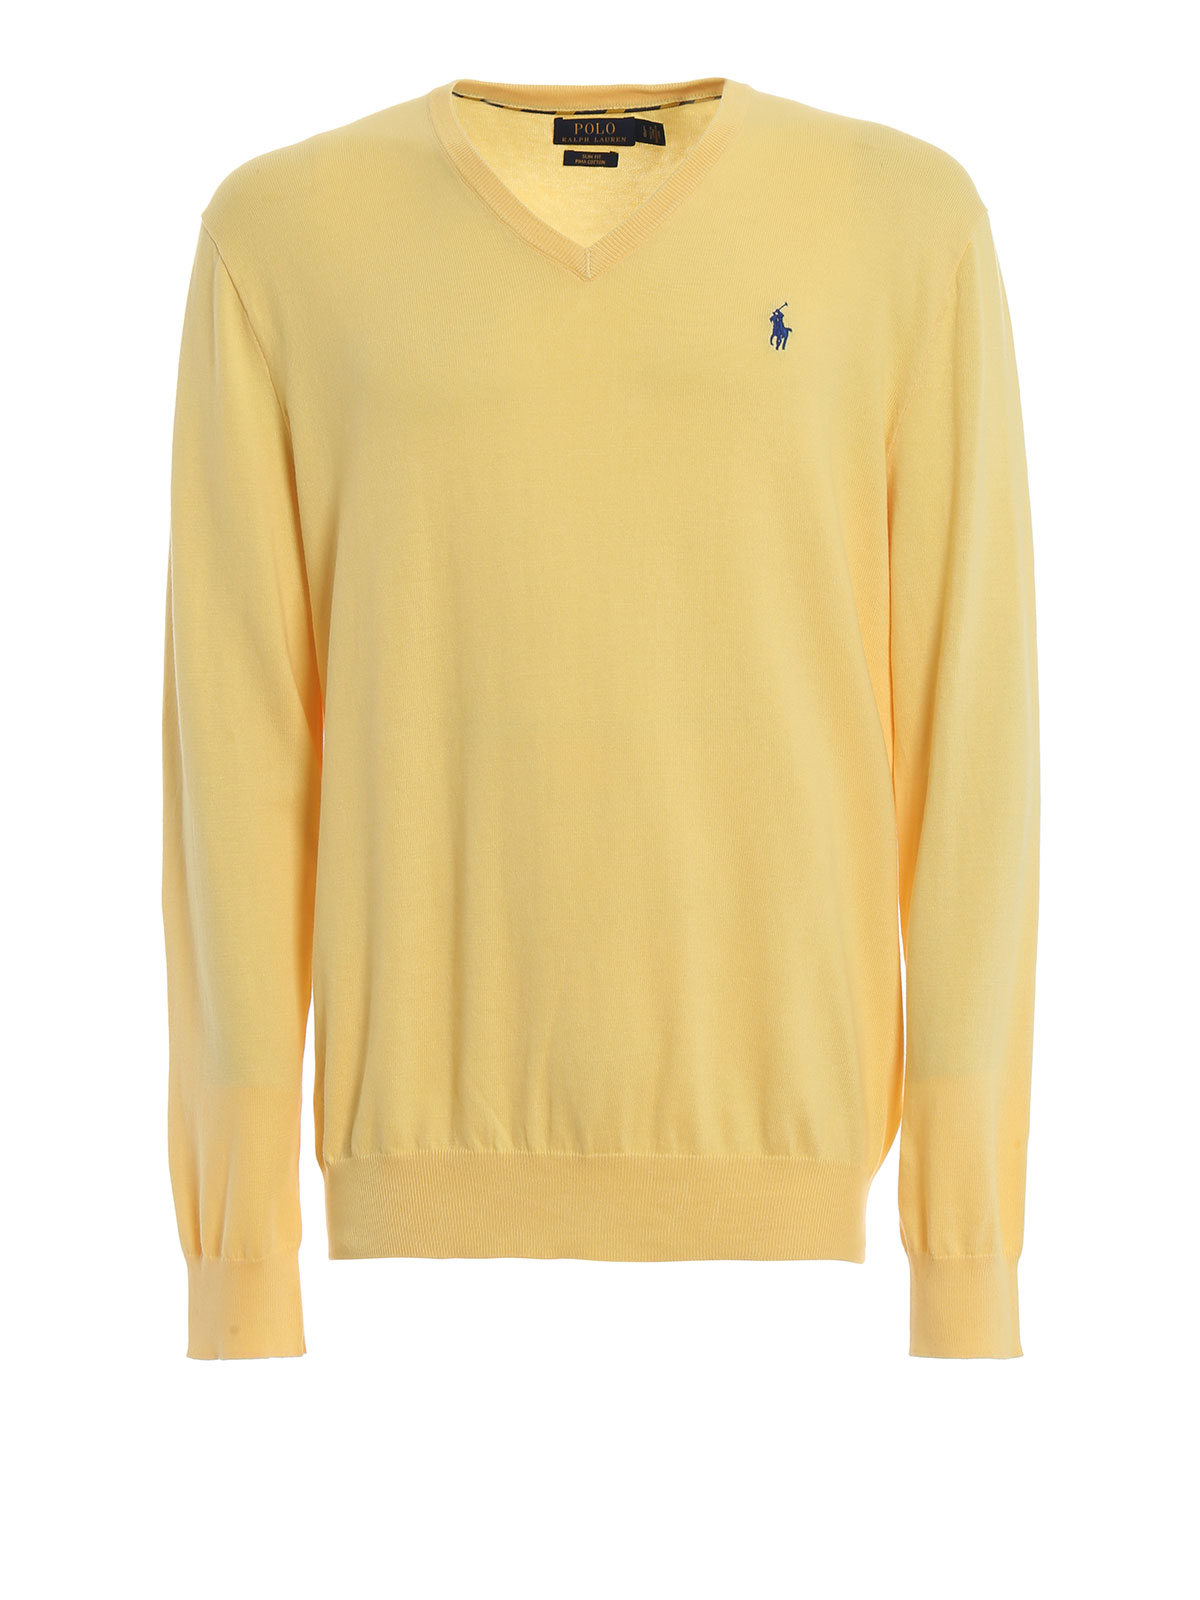 polo ralph lauren yellow sweater